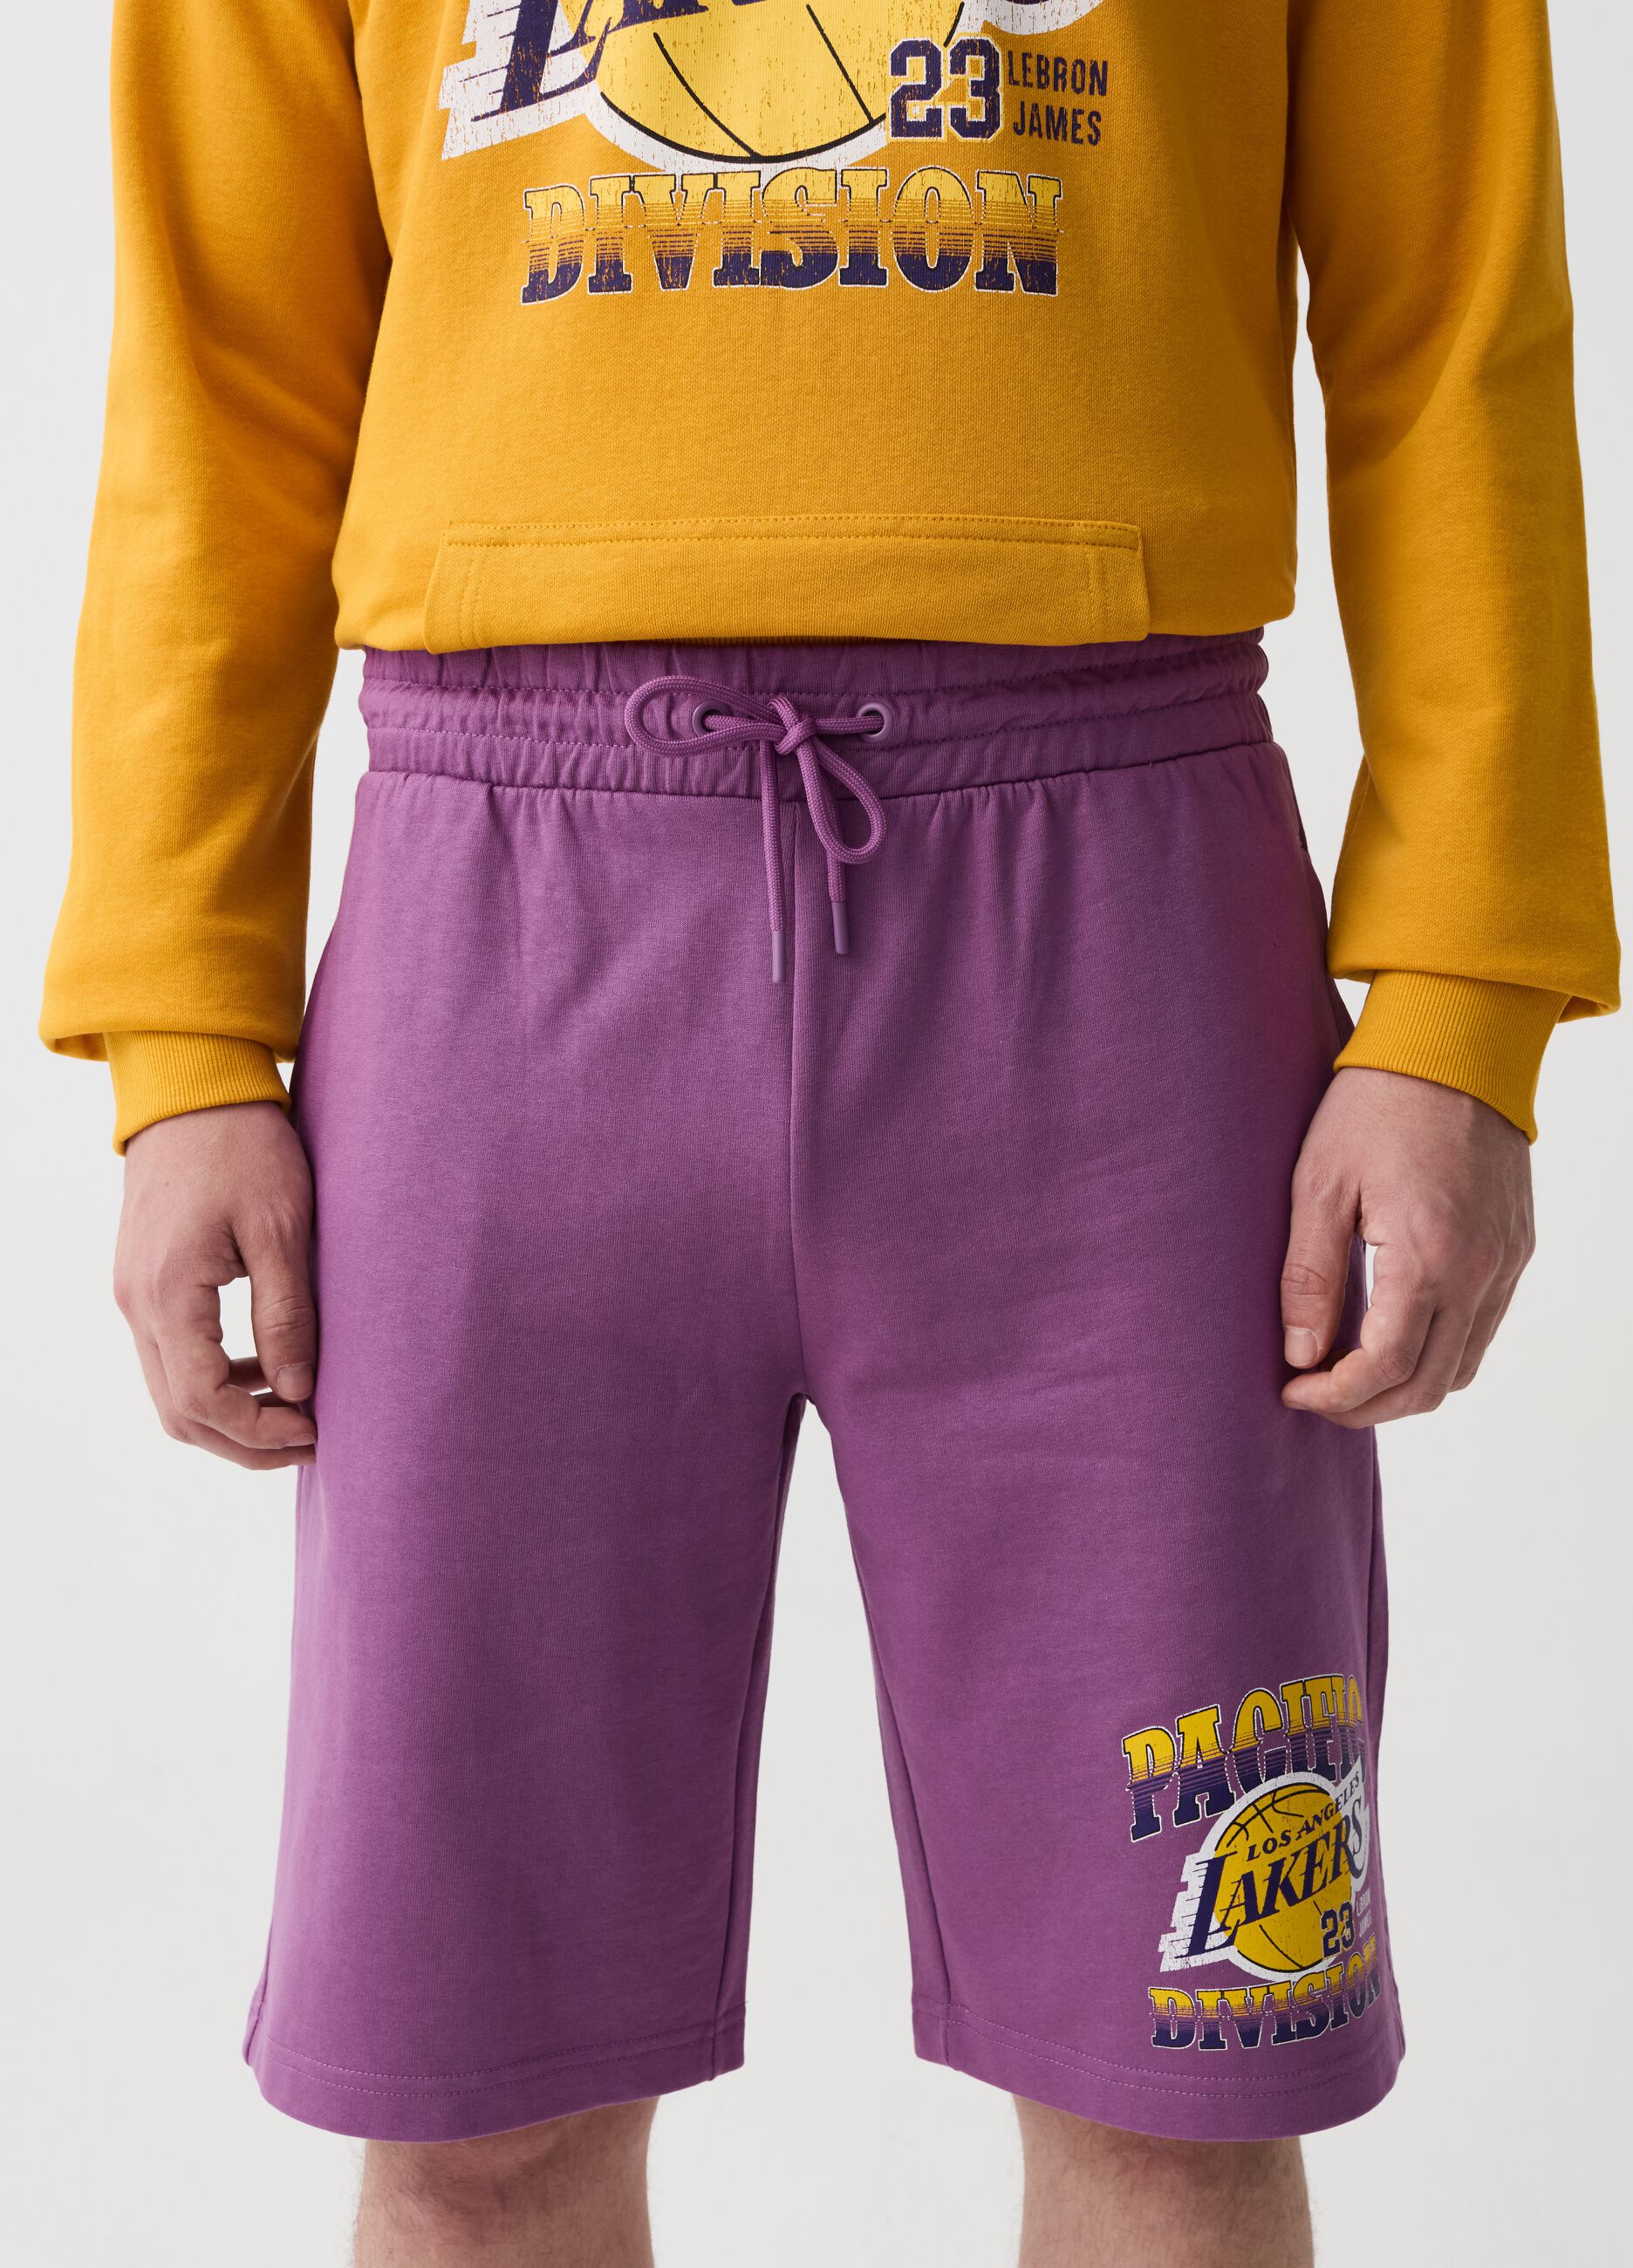 Fleece Bermuda shorts with NBA Los Angeles Lakers print